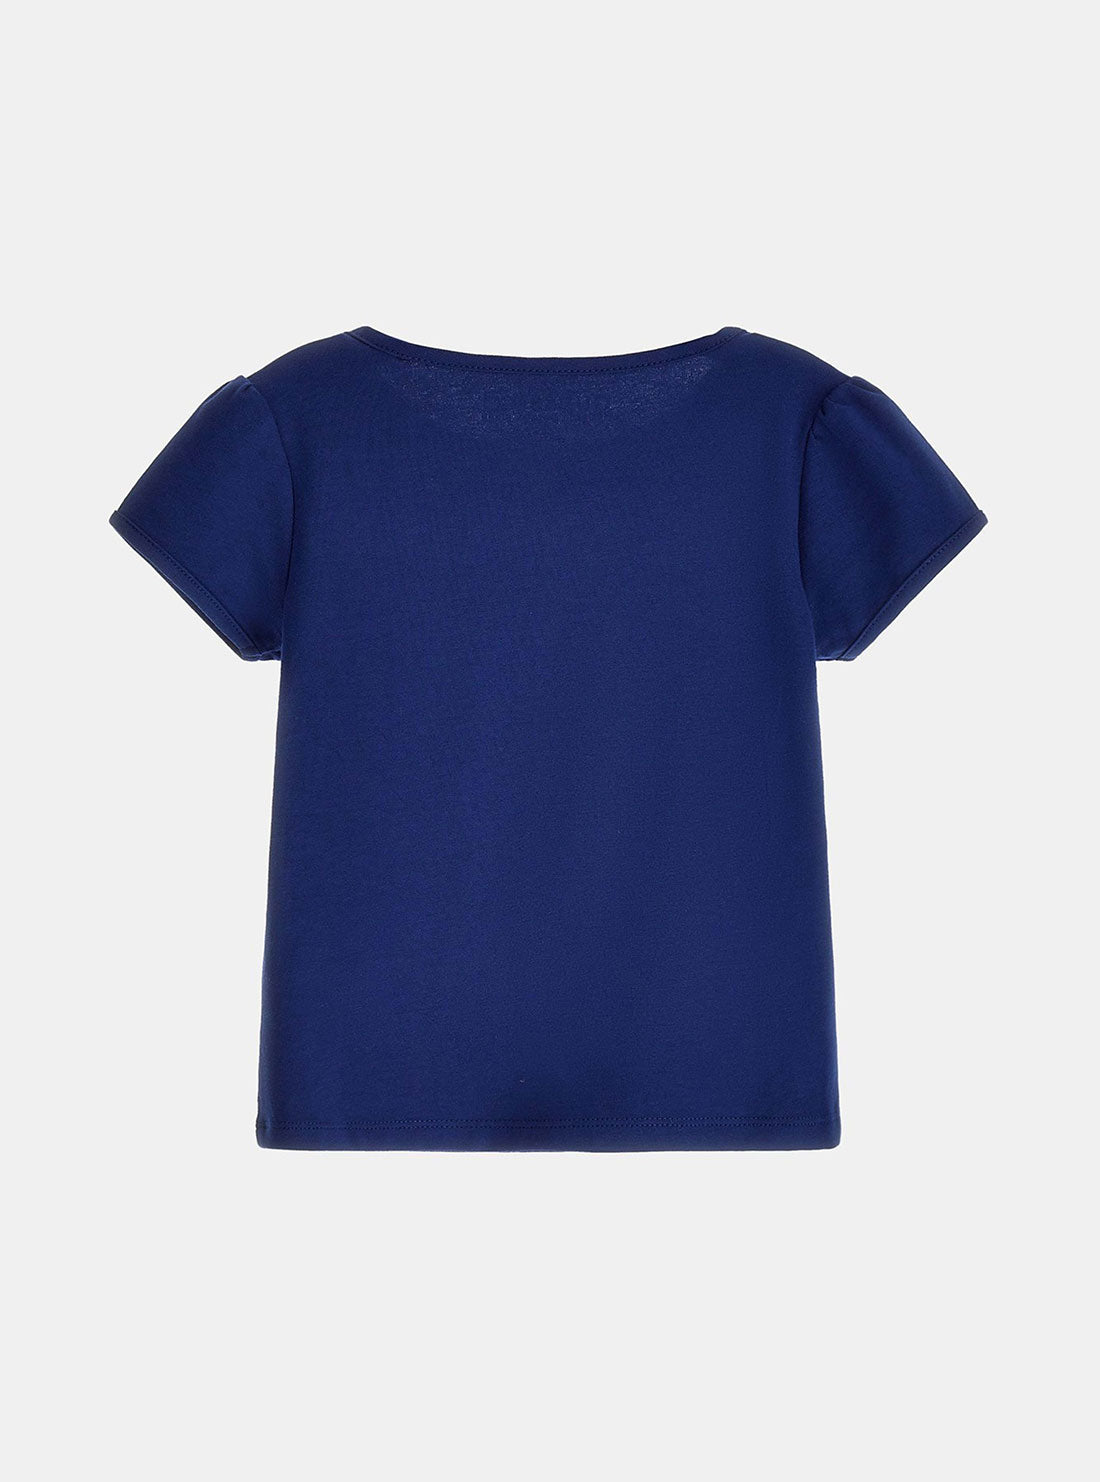 GUESS GUESS Blue Short Sleeve T-Shirt (2-7) back view